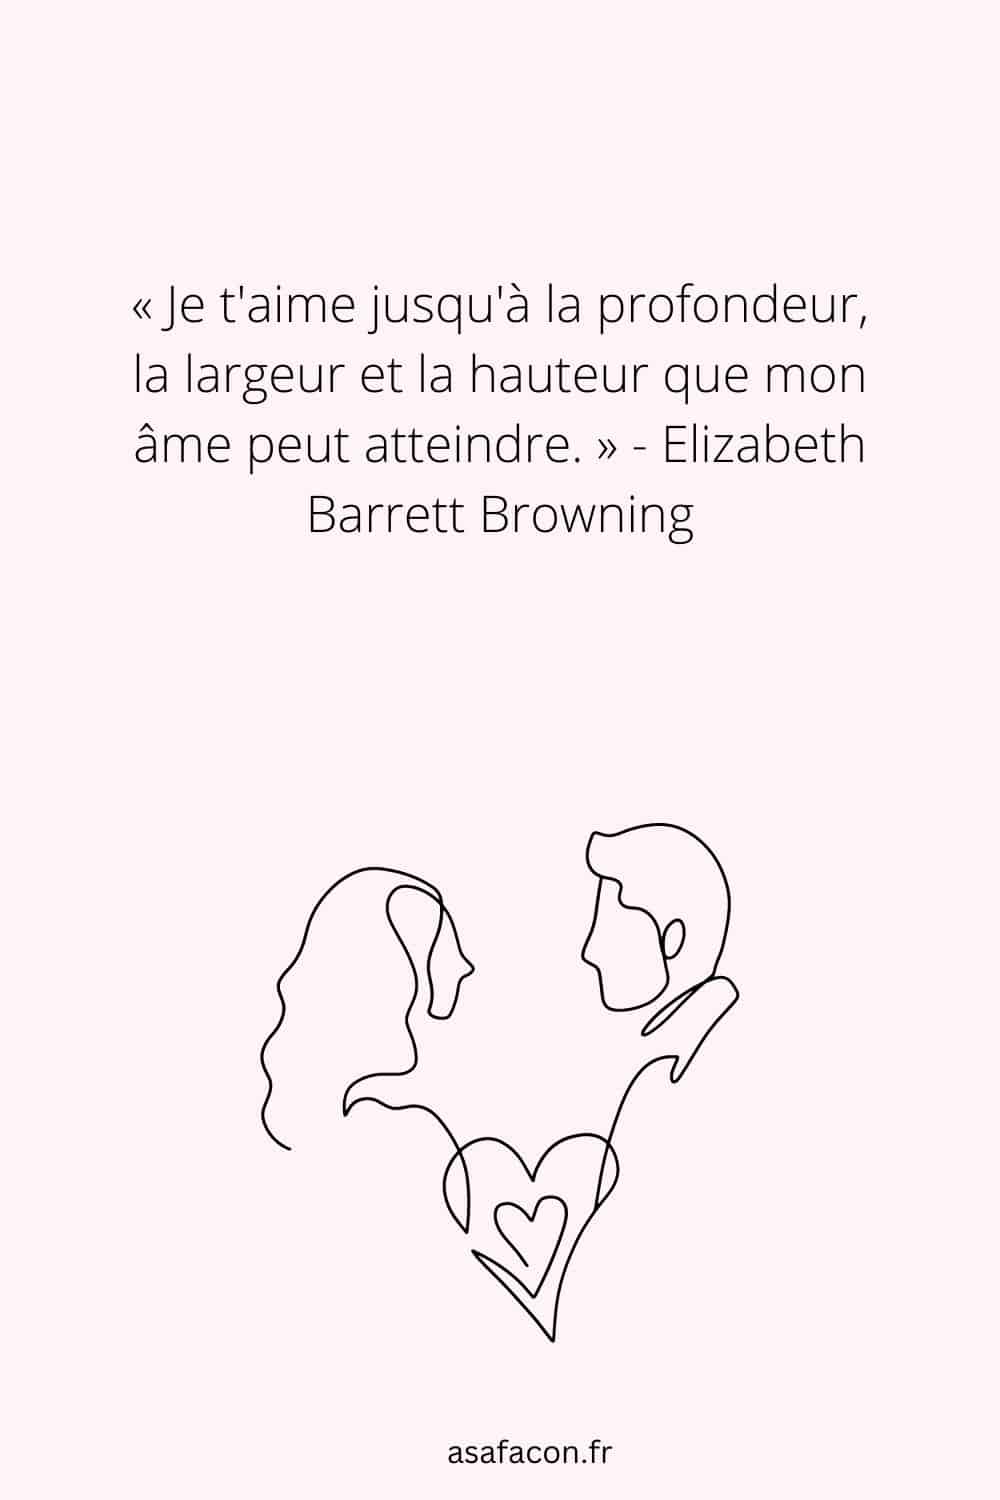 Citation flammes jumelles d'Elizabeth Barrett Browning